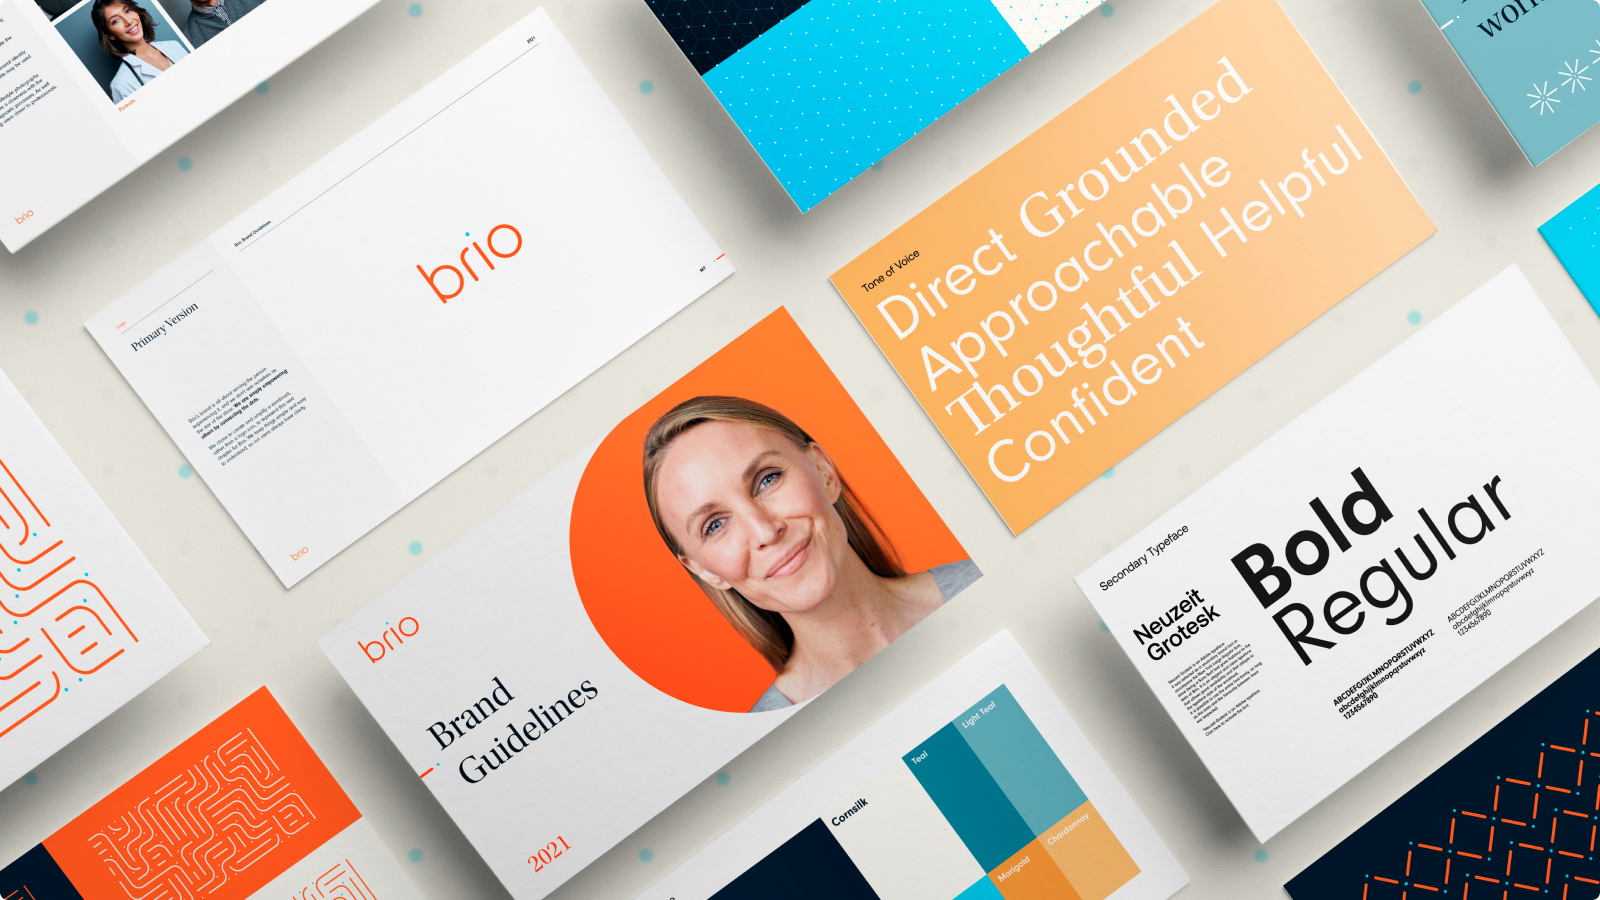 A mockup of Brio Systems’ brand guide